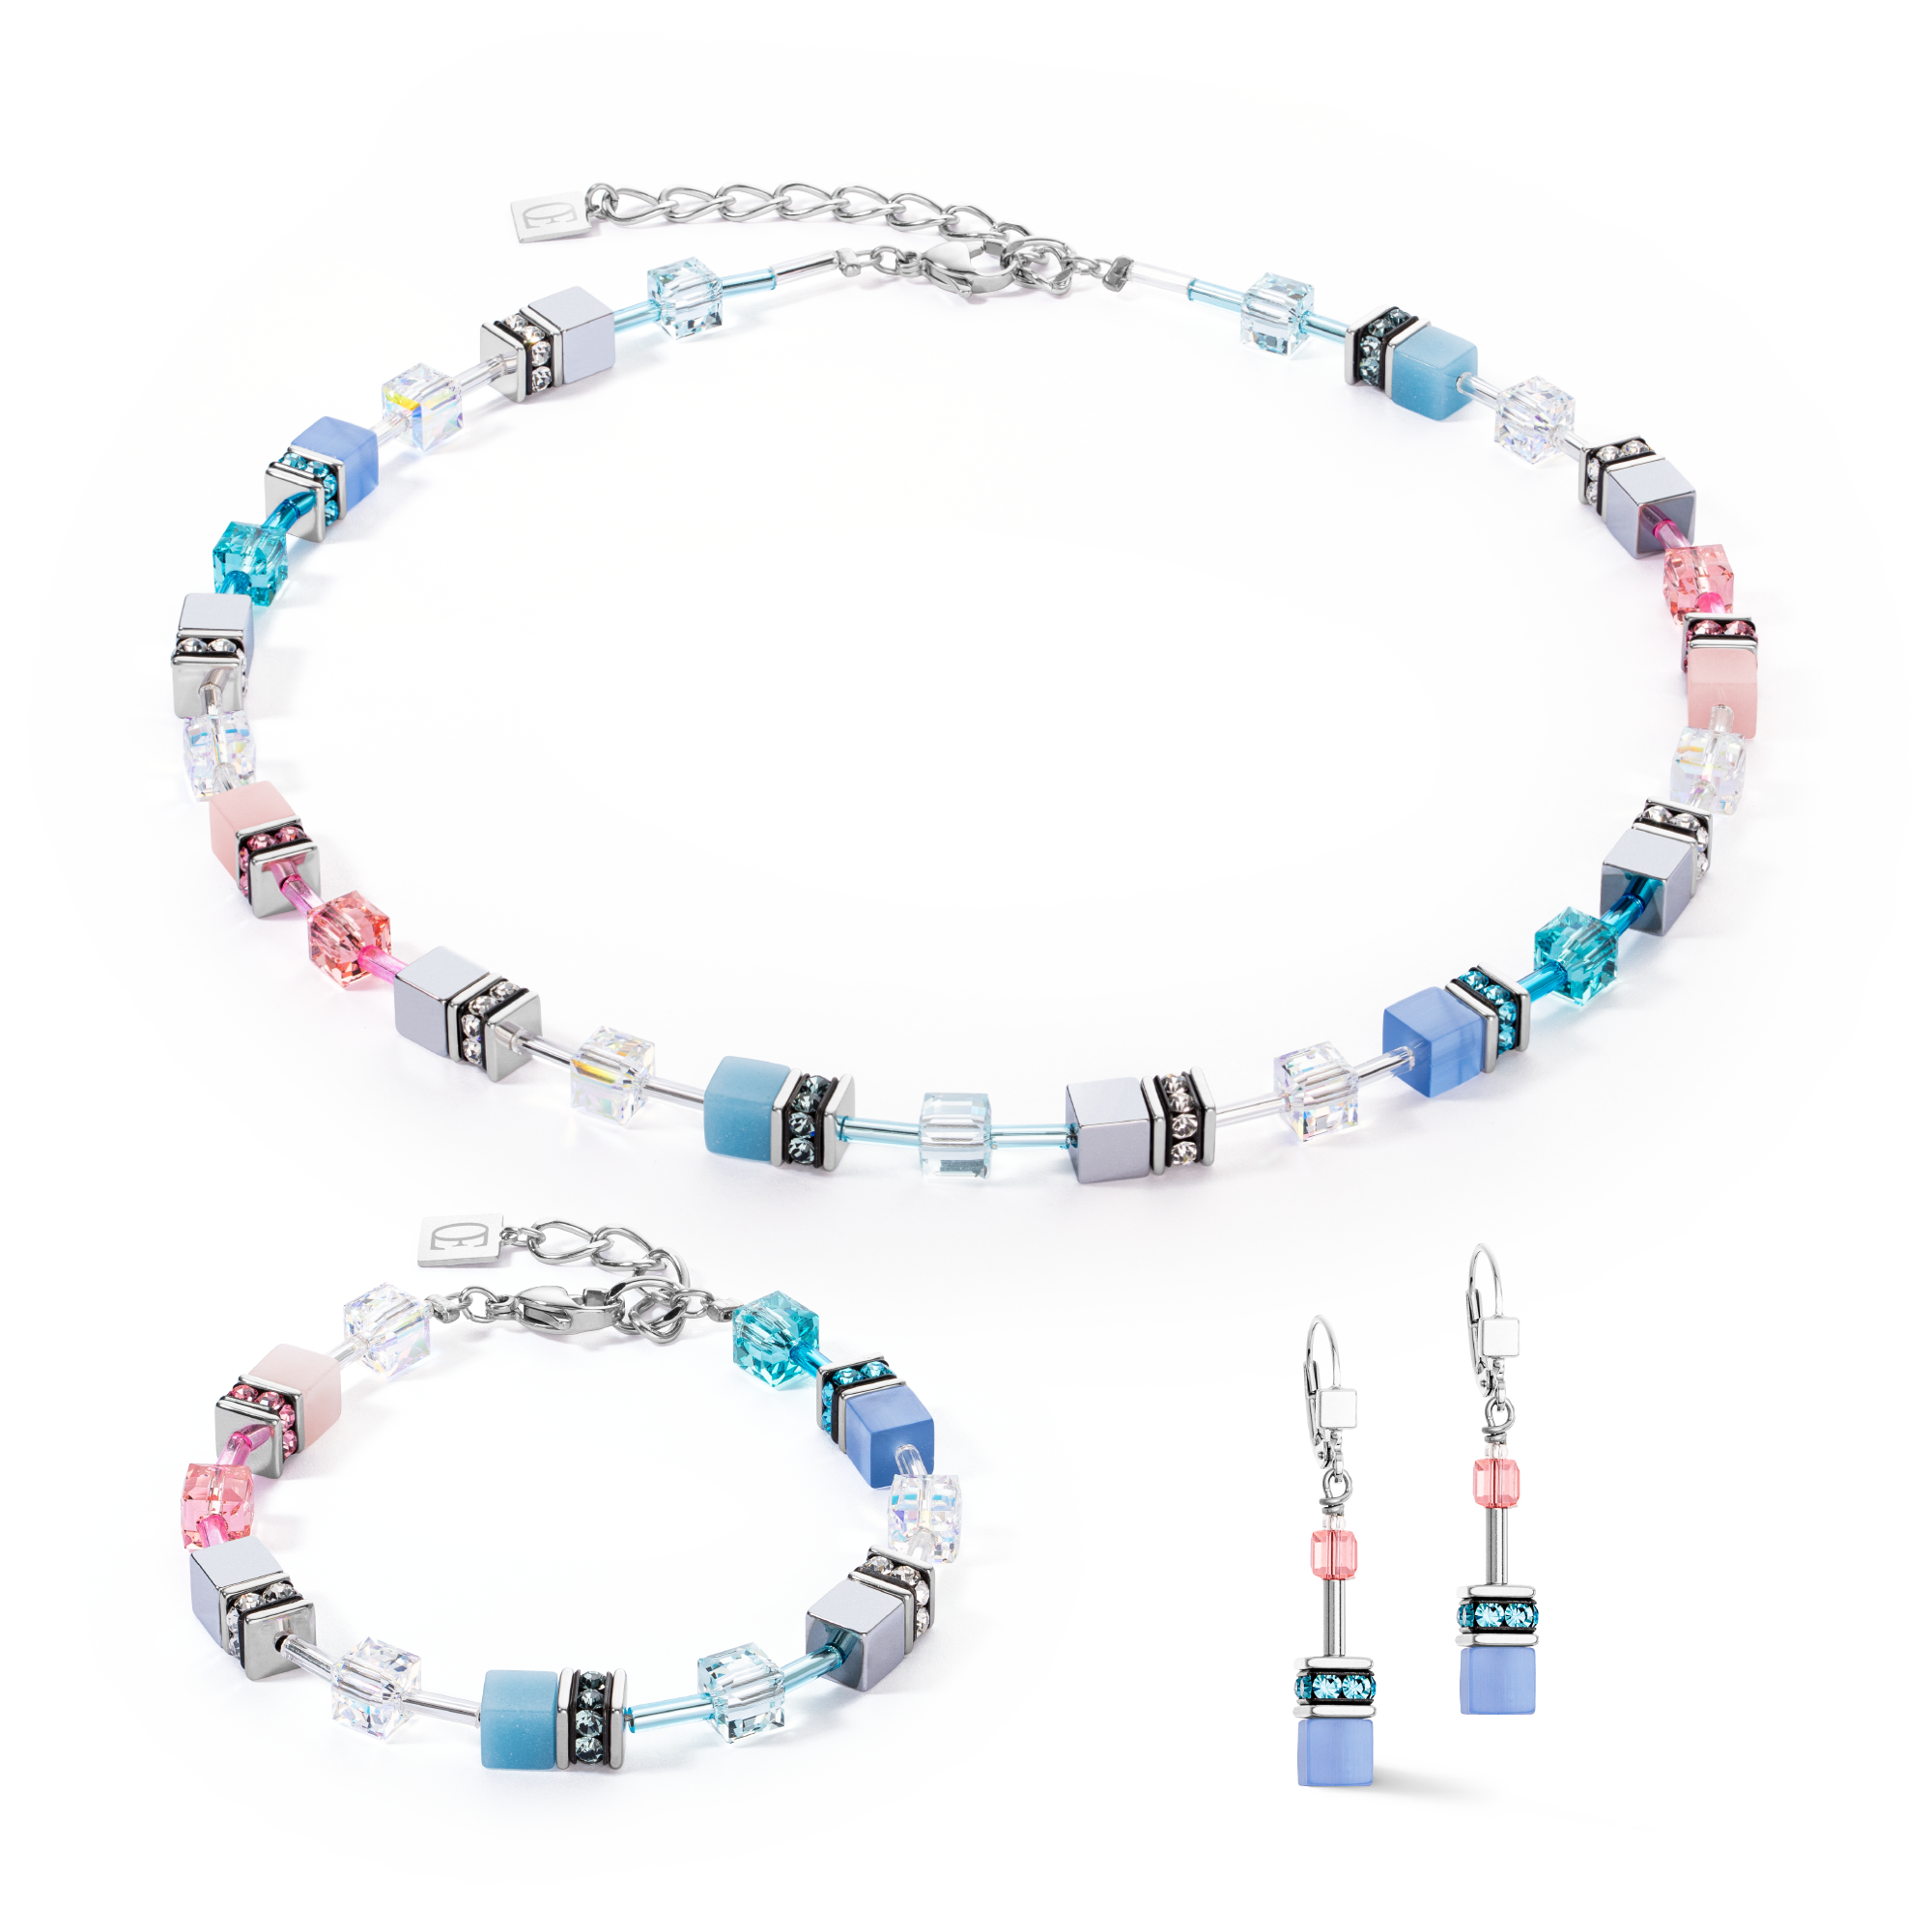 GeoCUBE® Iconic earrings blue-pink